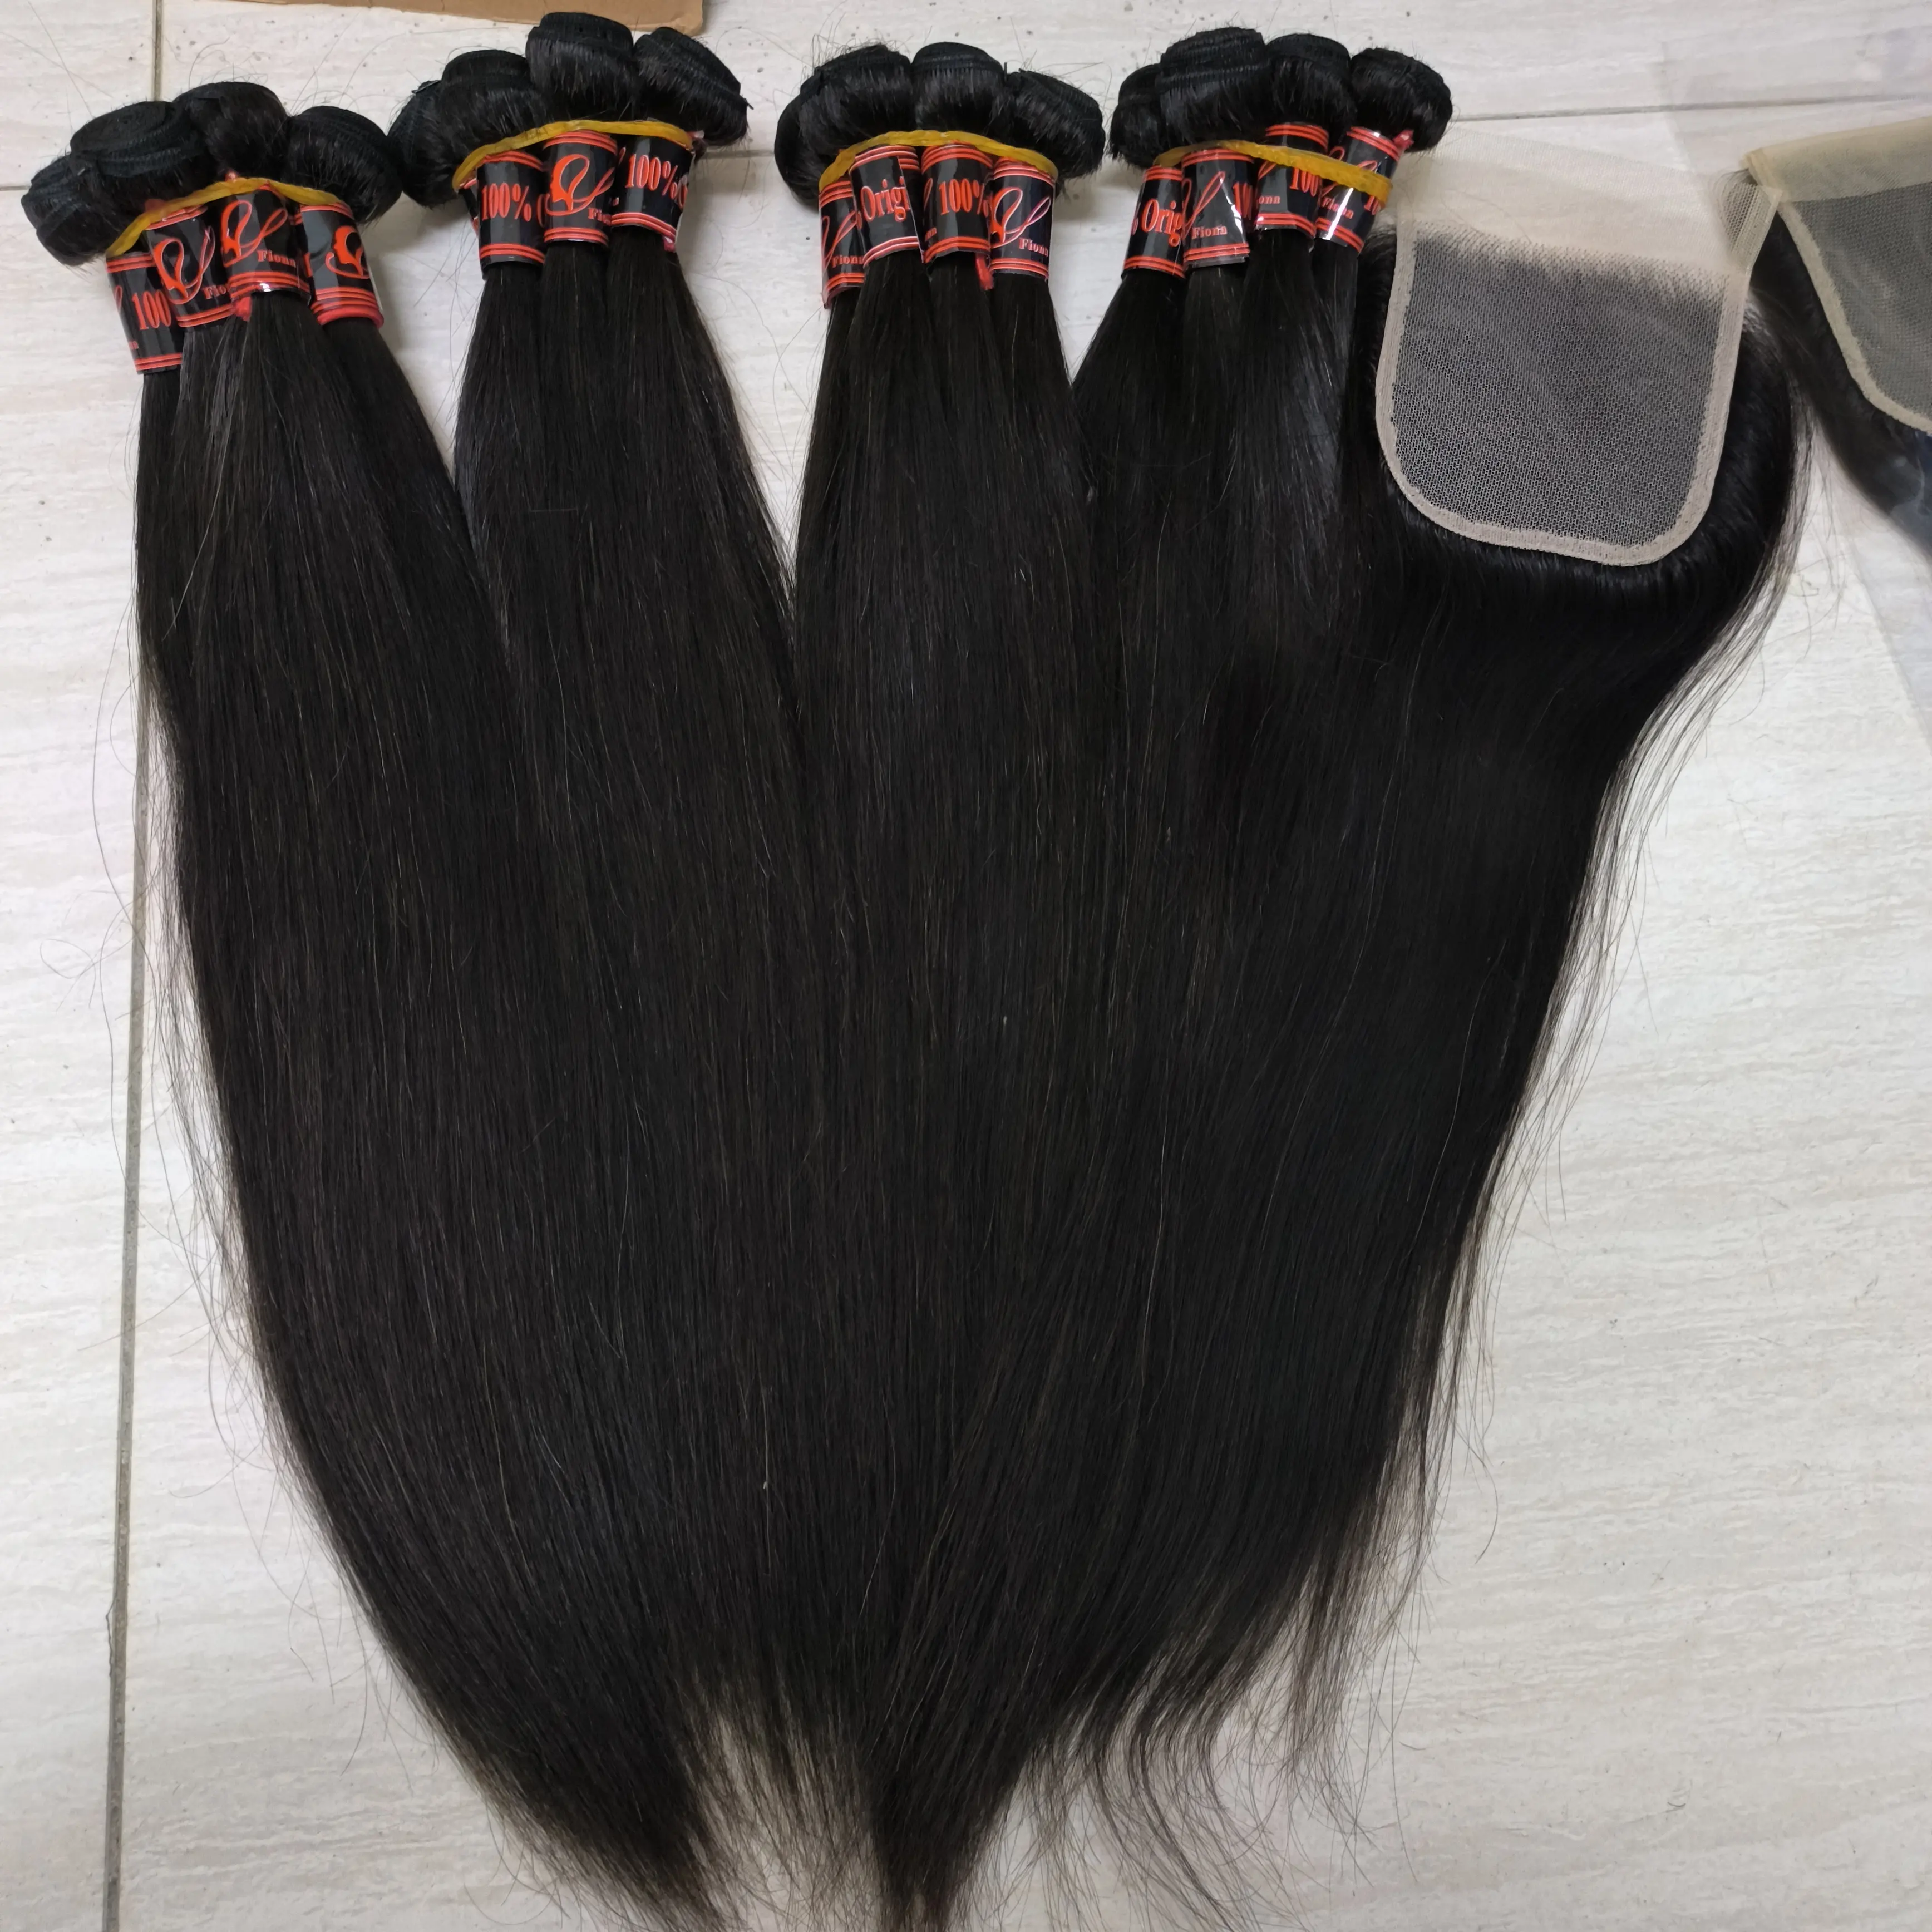 Letsfly wholesale straight hair 18inch 100% human hair bundles in stock 9A grade natural color Brazilian virgin hair extension